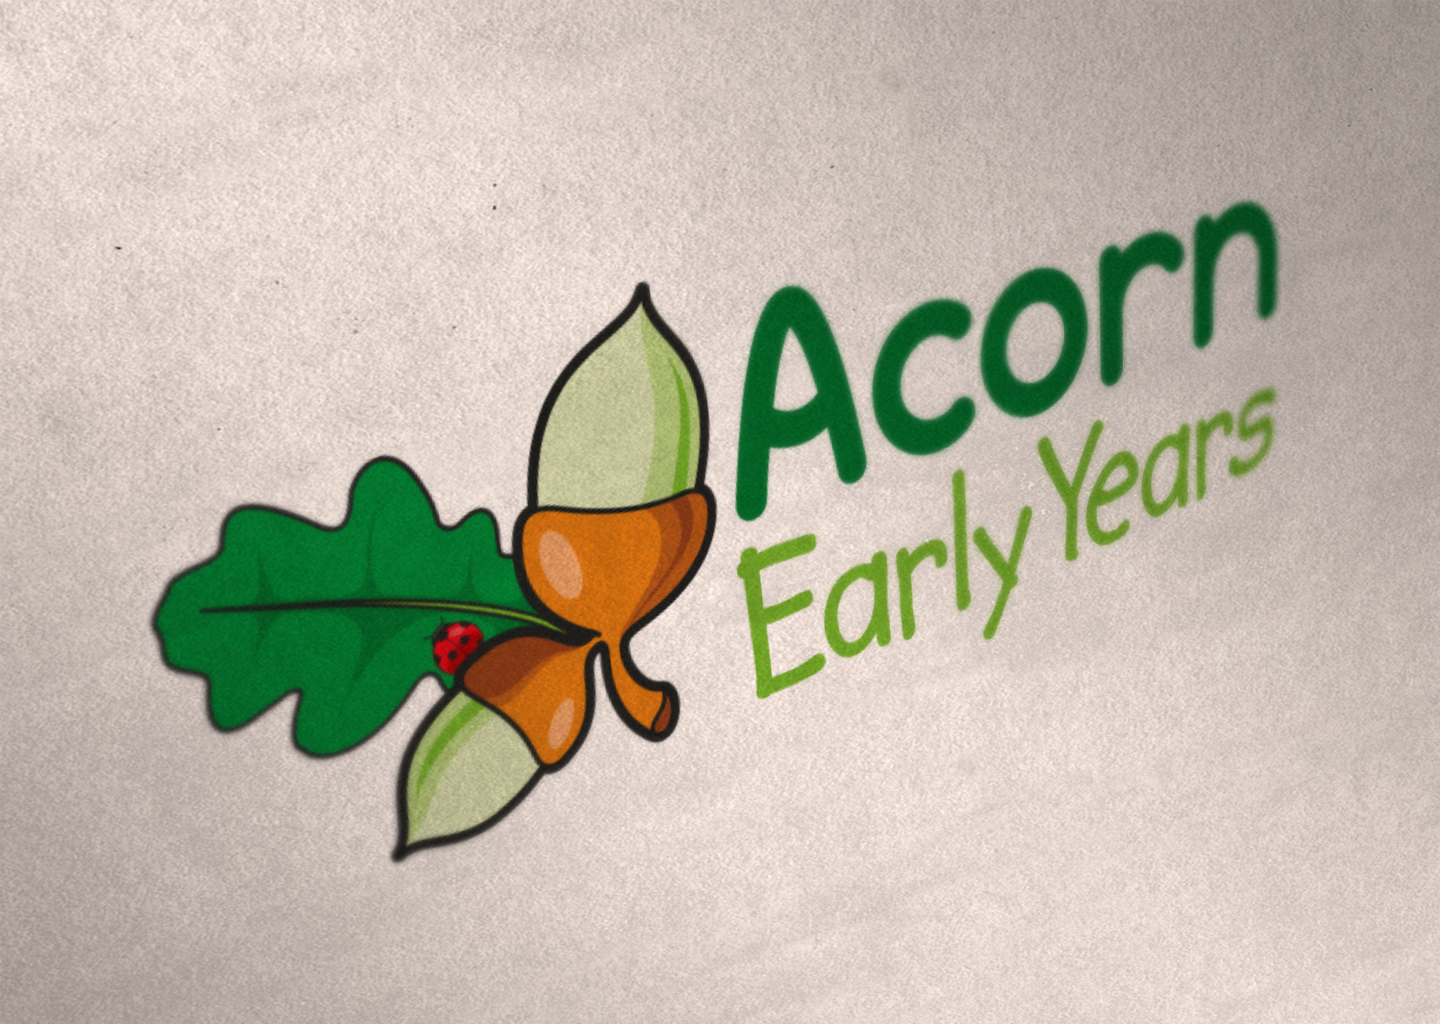 01_Acorn logos_Early Years web